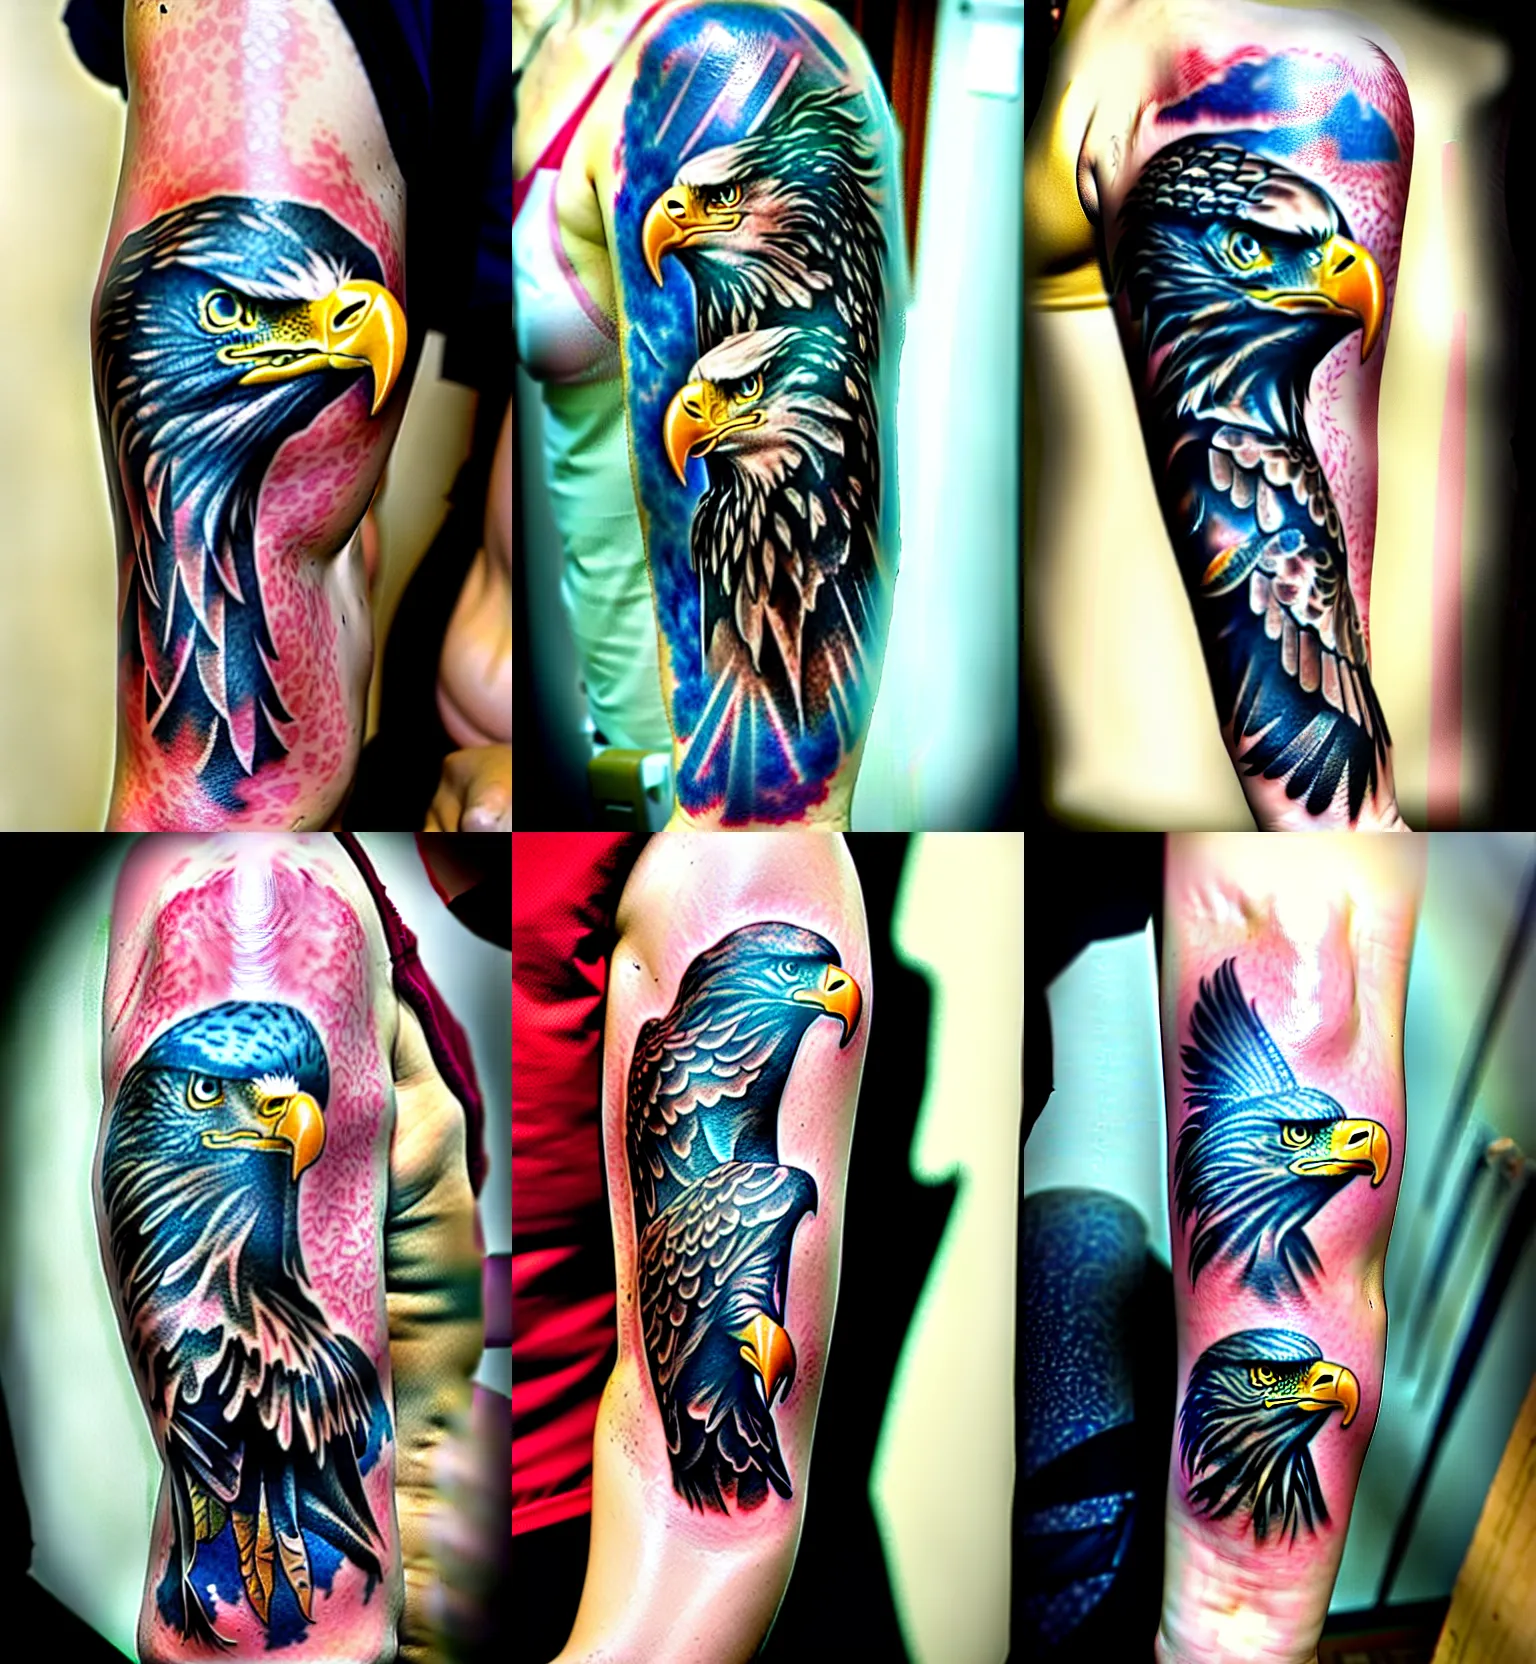 Prompt: far shot of arm with bald eagle tattoo, tattoo